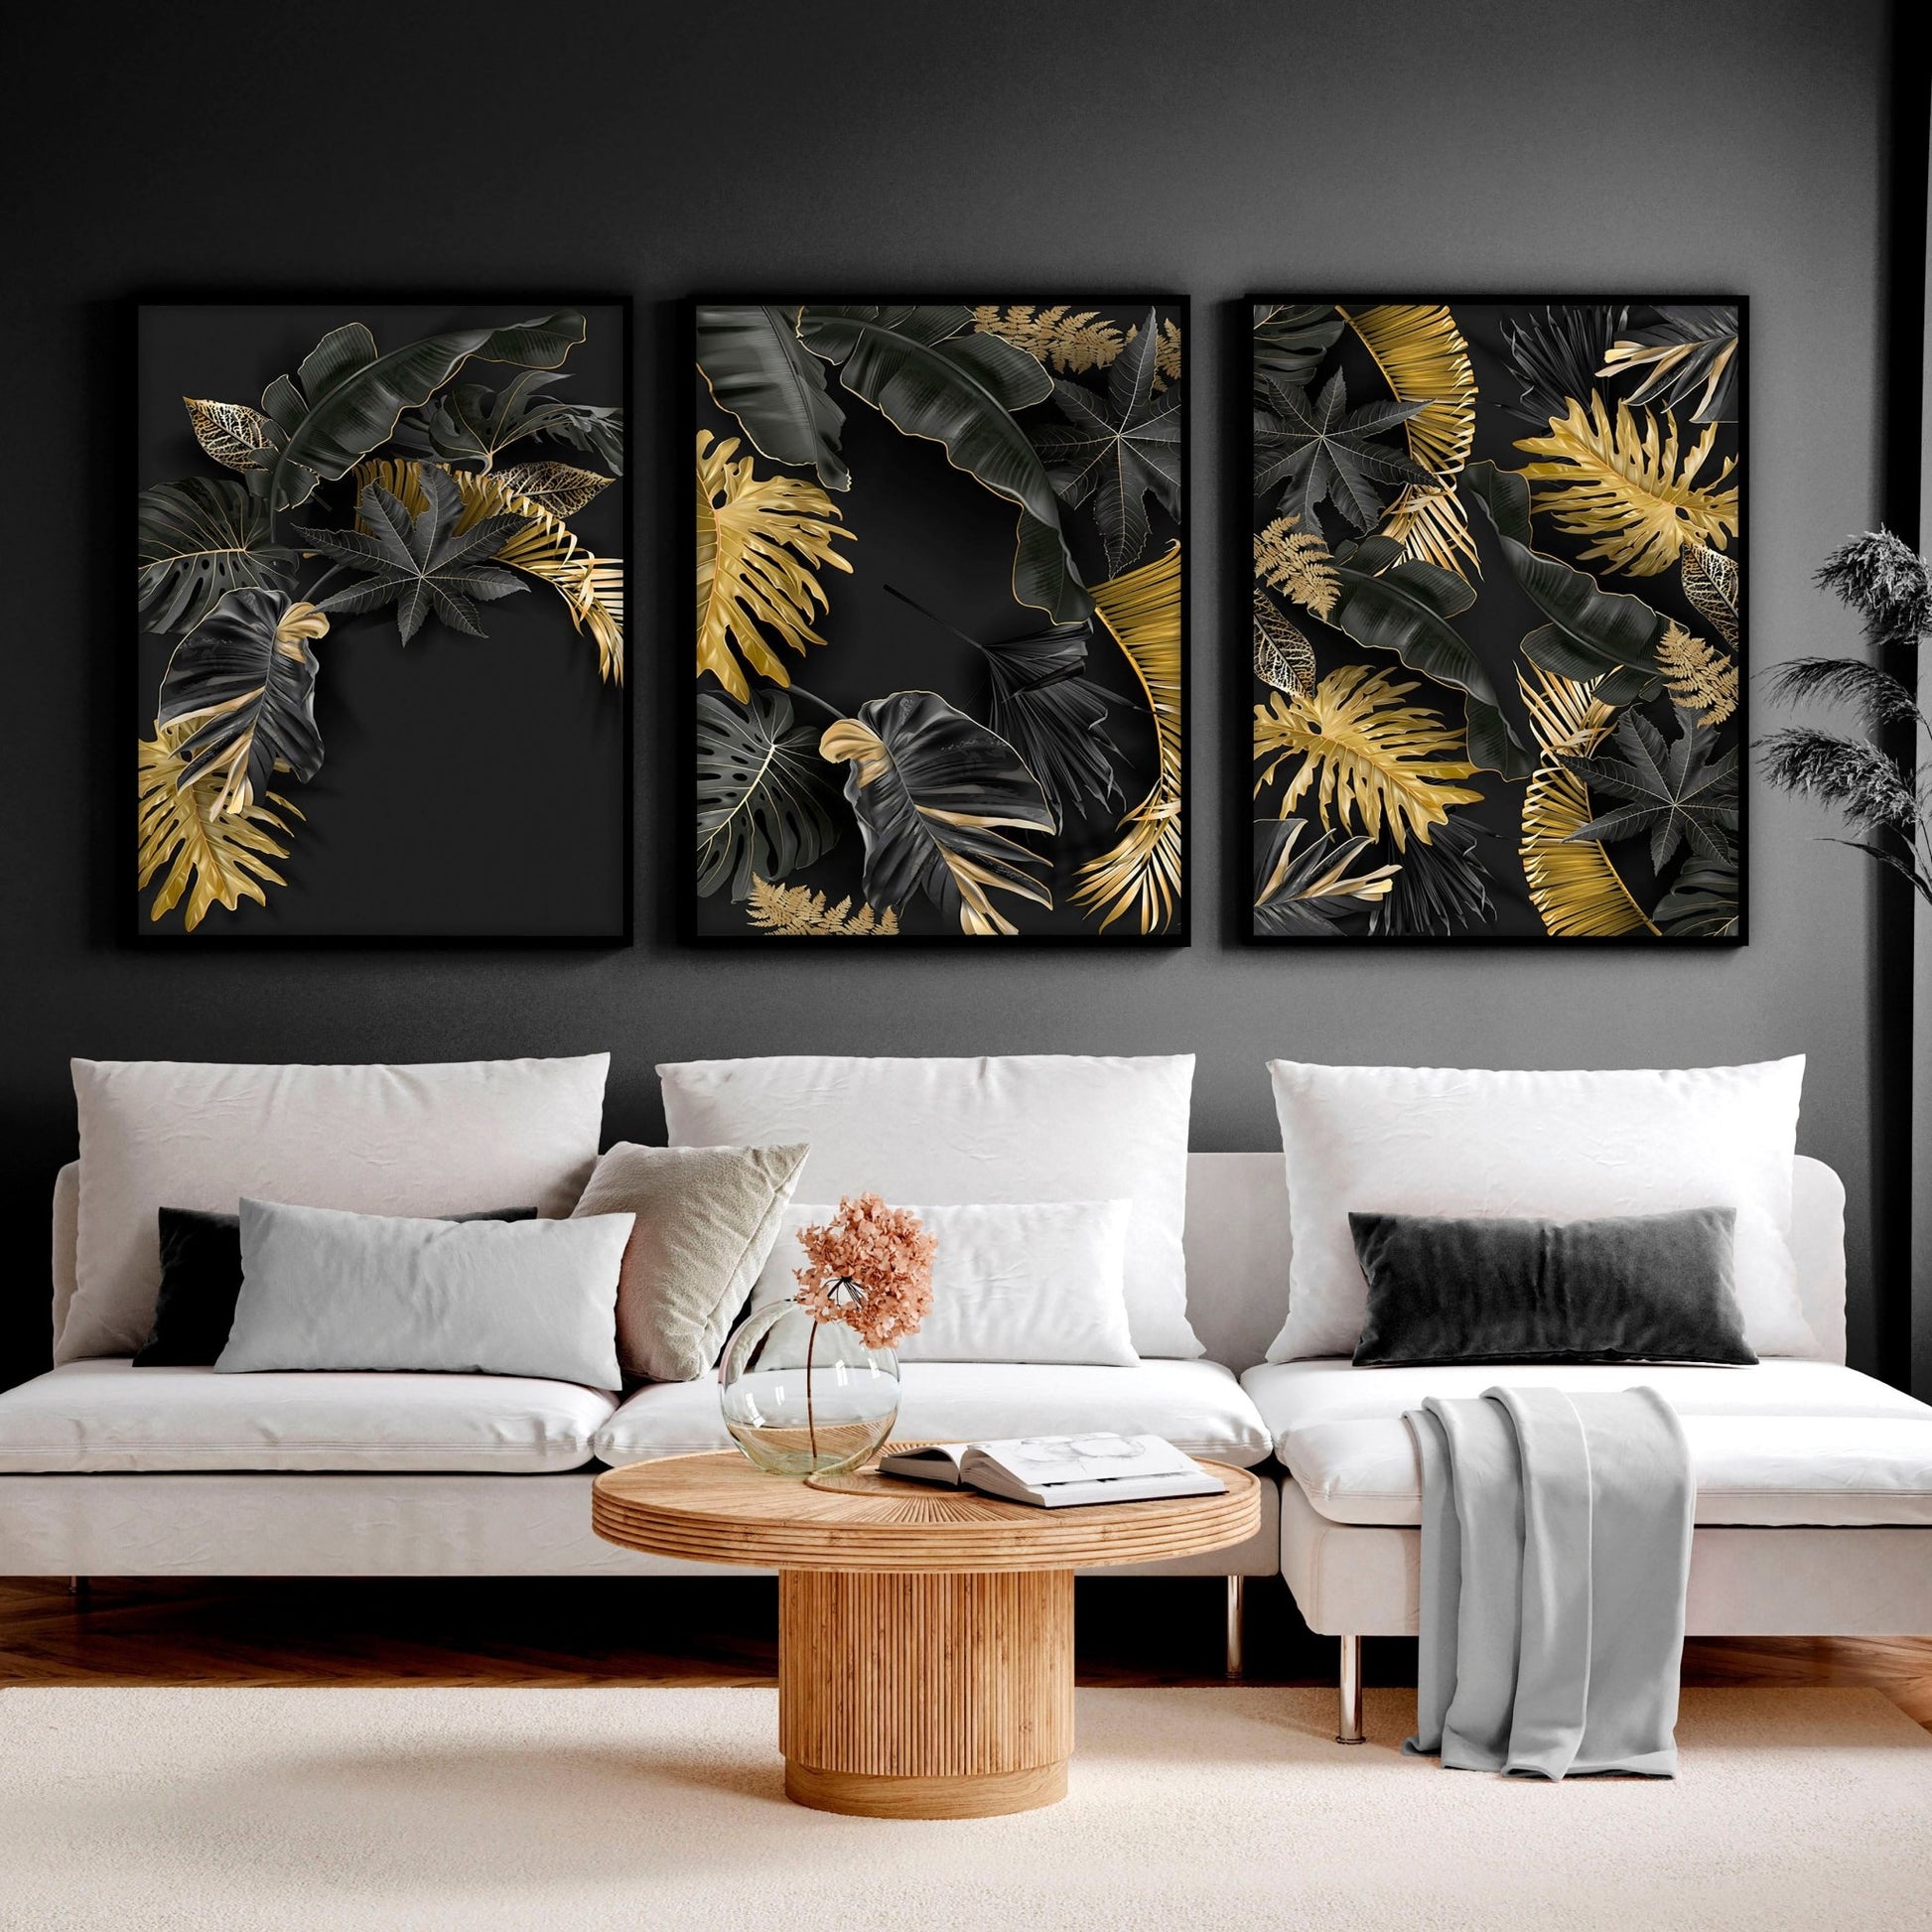 Gold tropical wall art | set of 3 wall art prints - About Wall Art